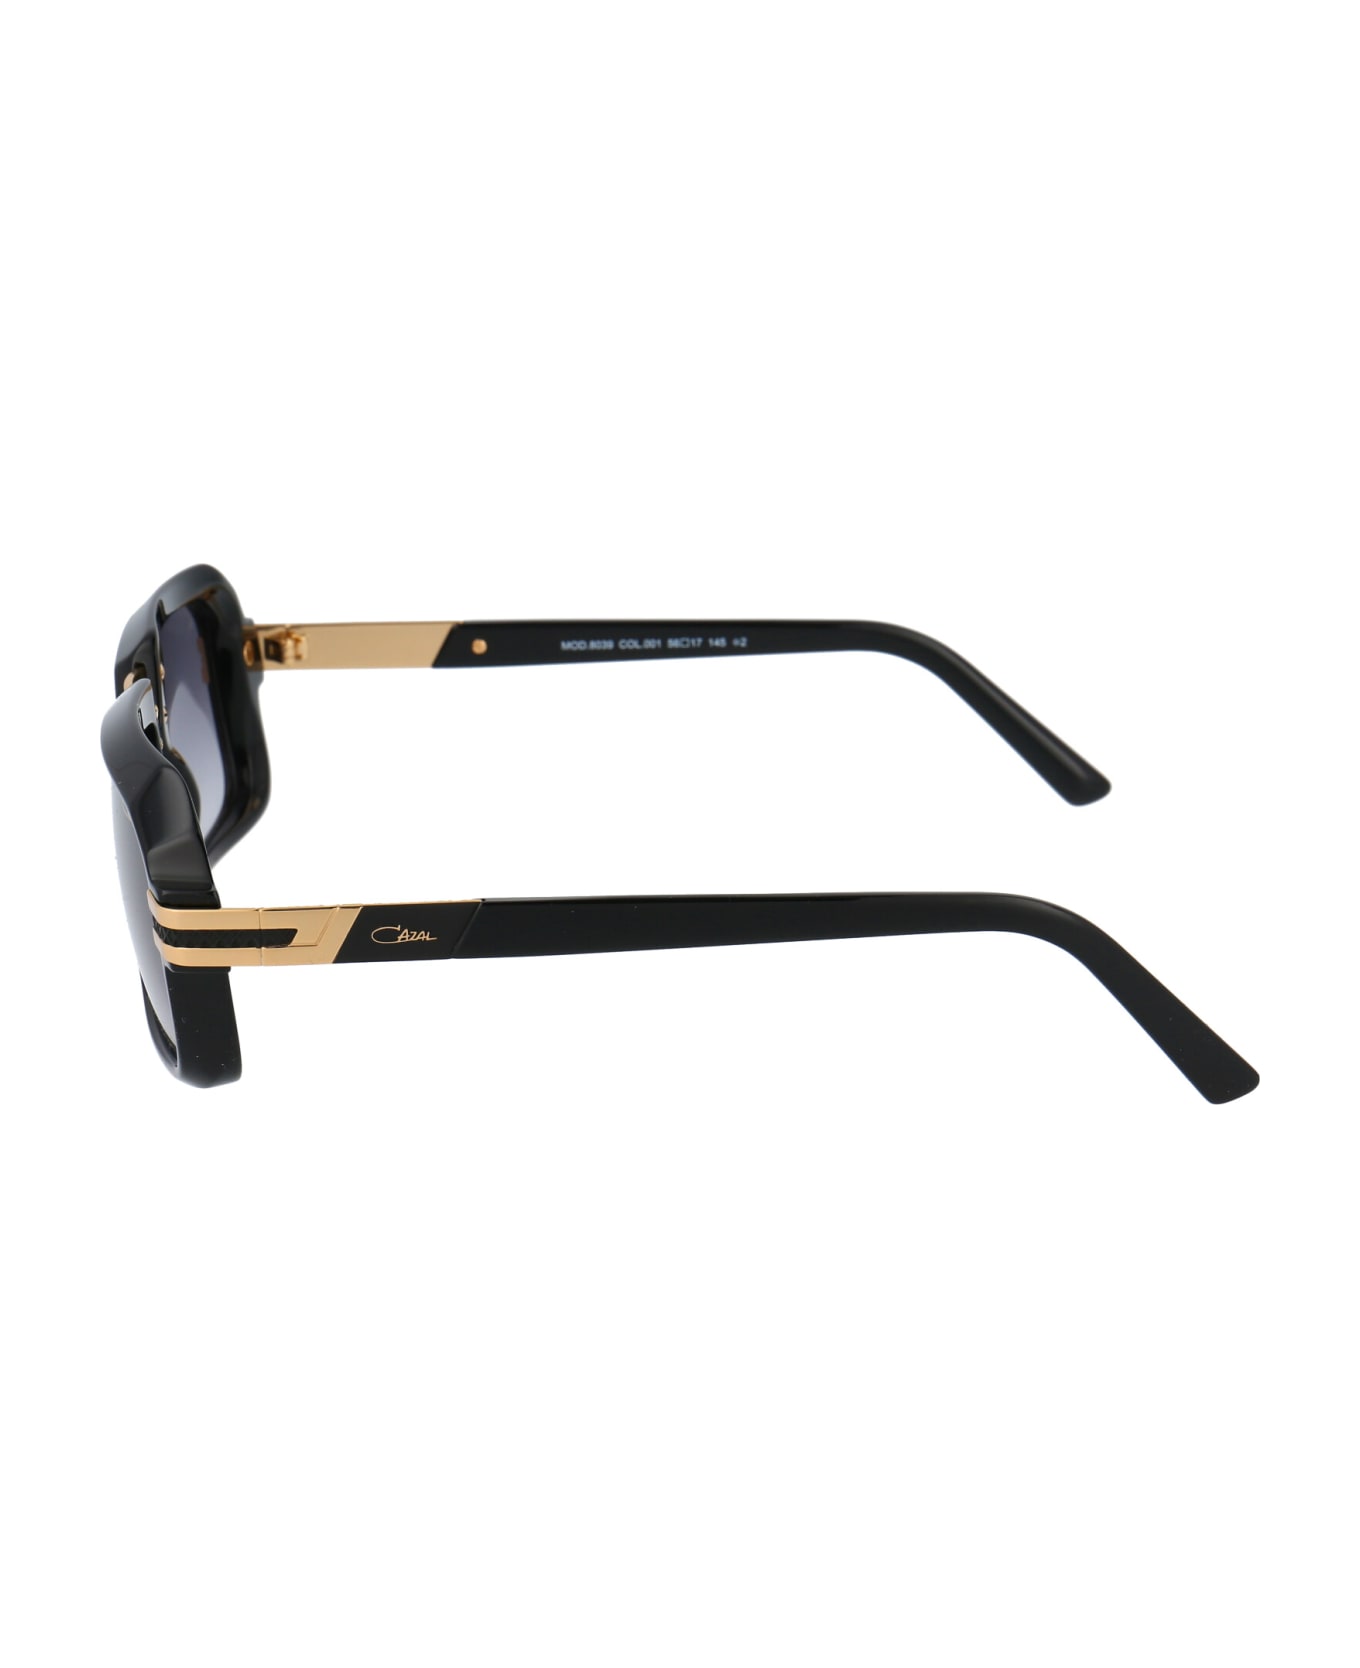 Cazal Mod. 8039 Sunglasses - BLACK